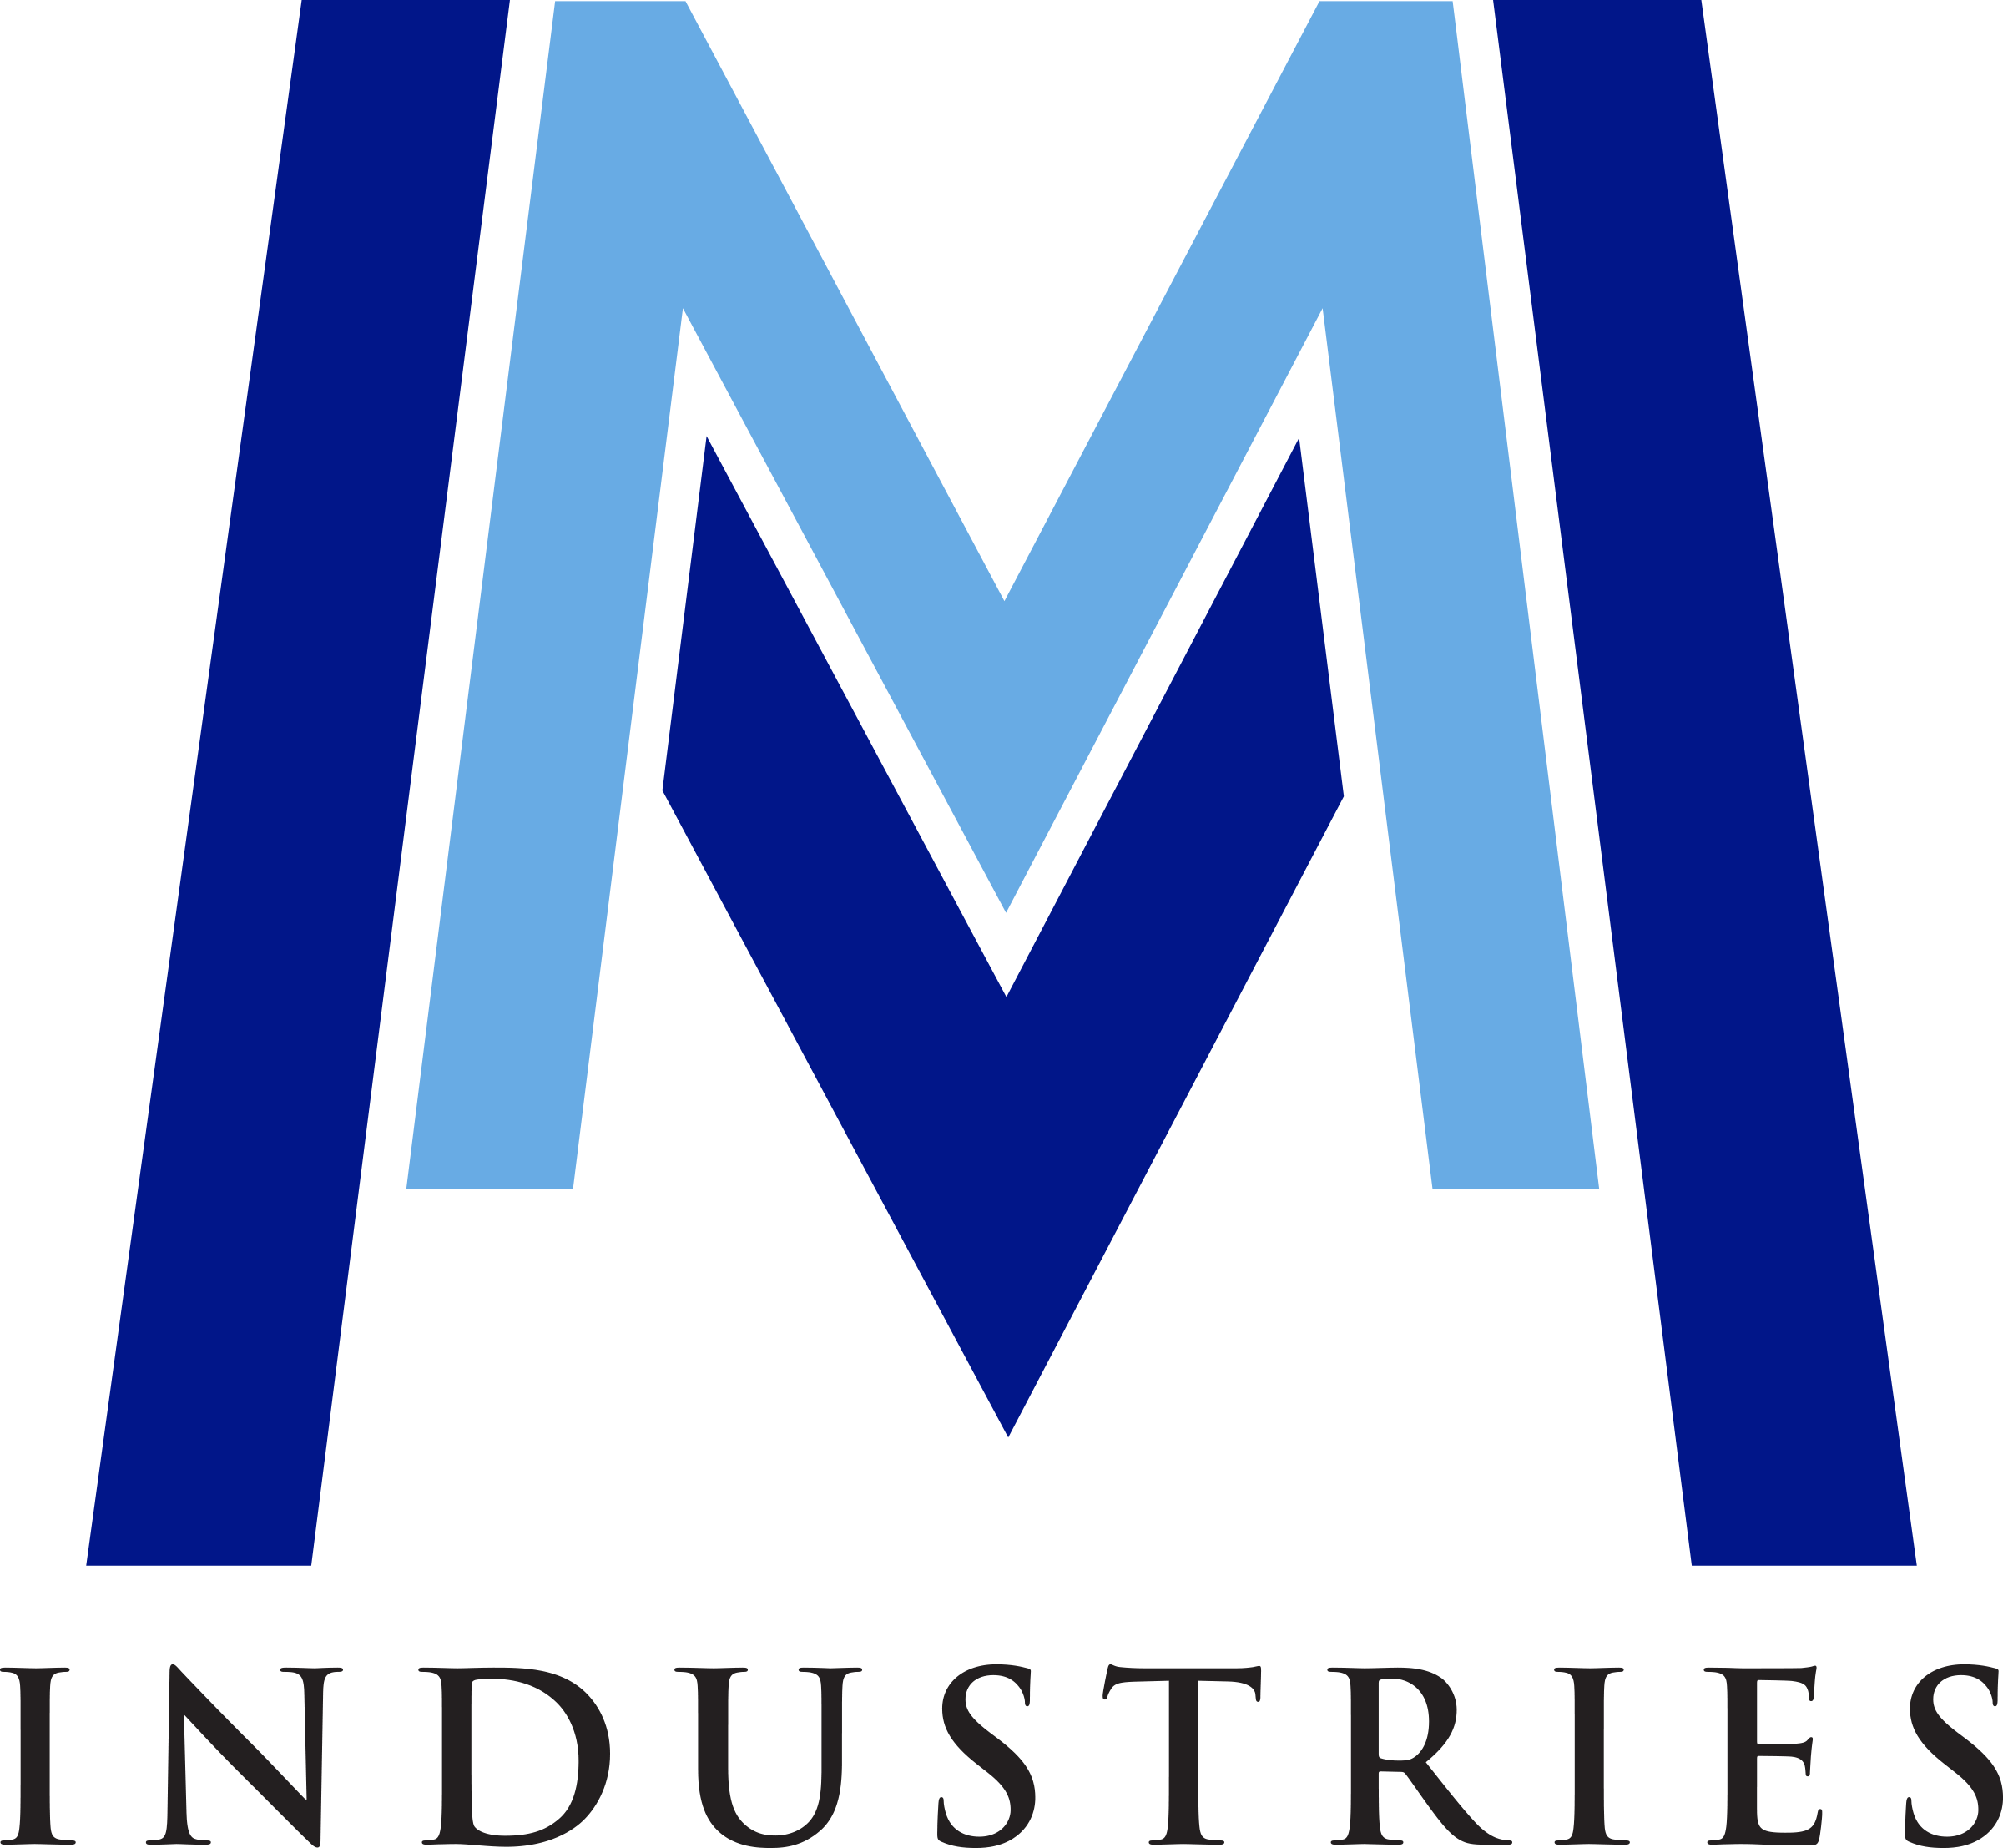 M&M Industries